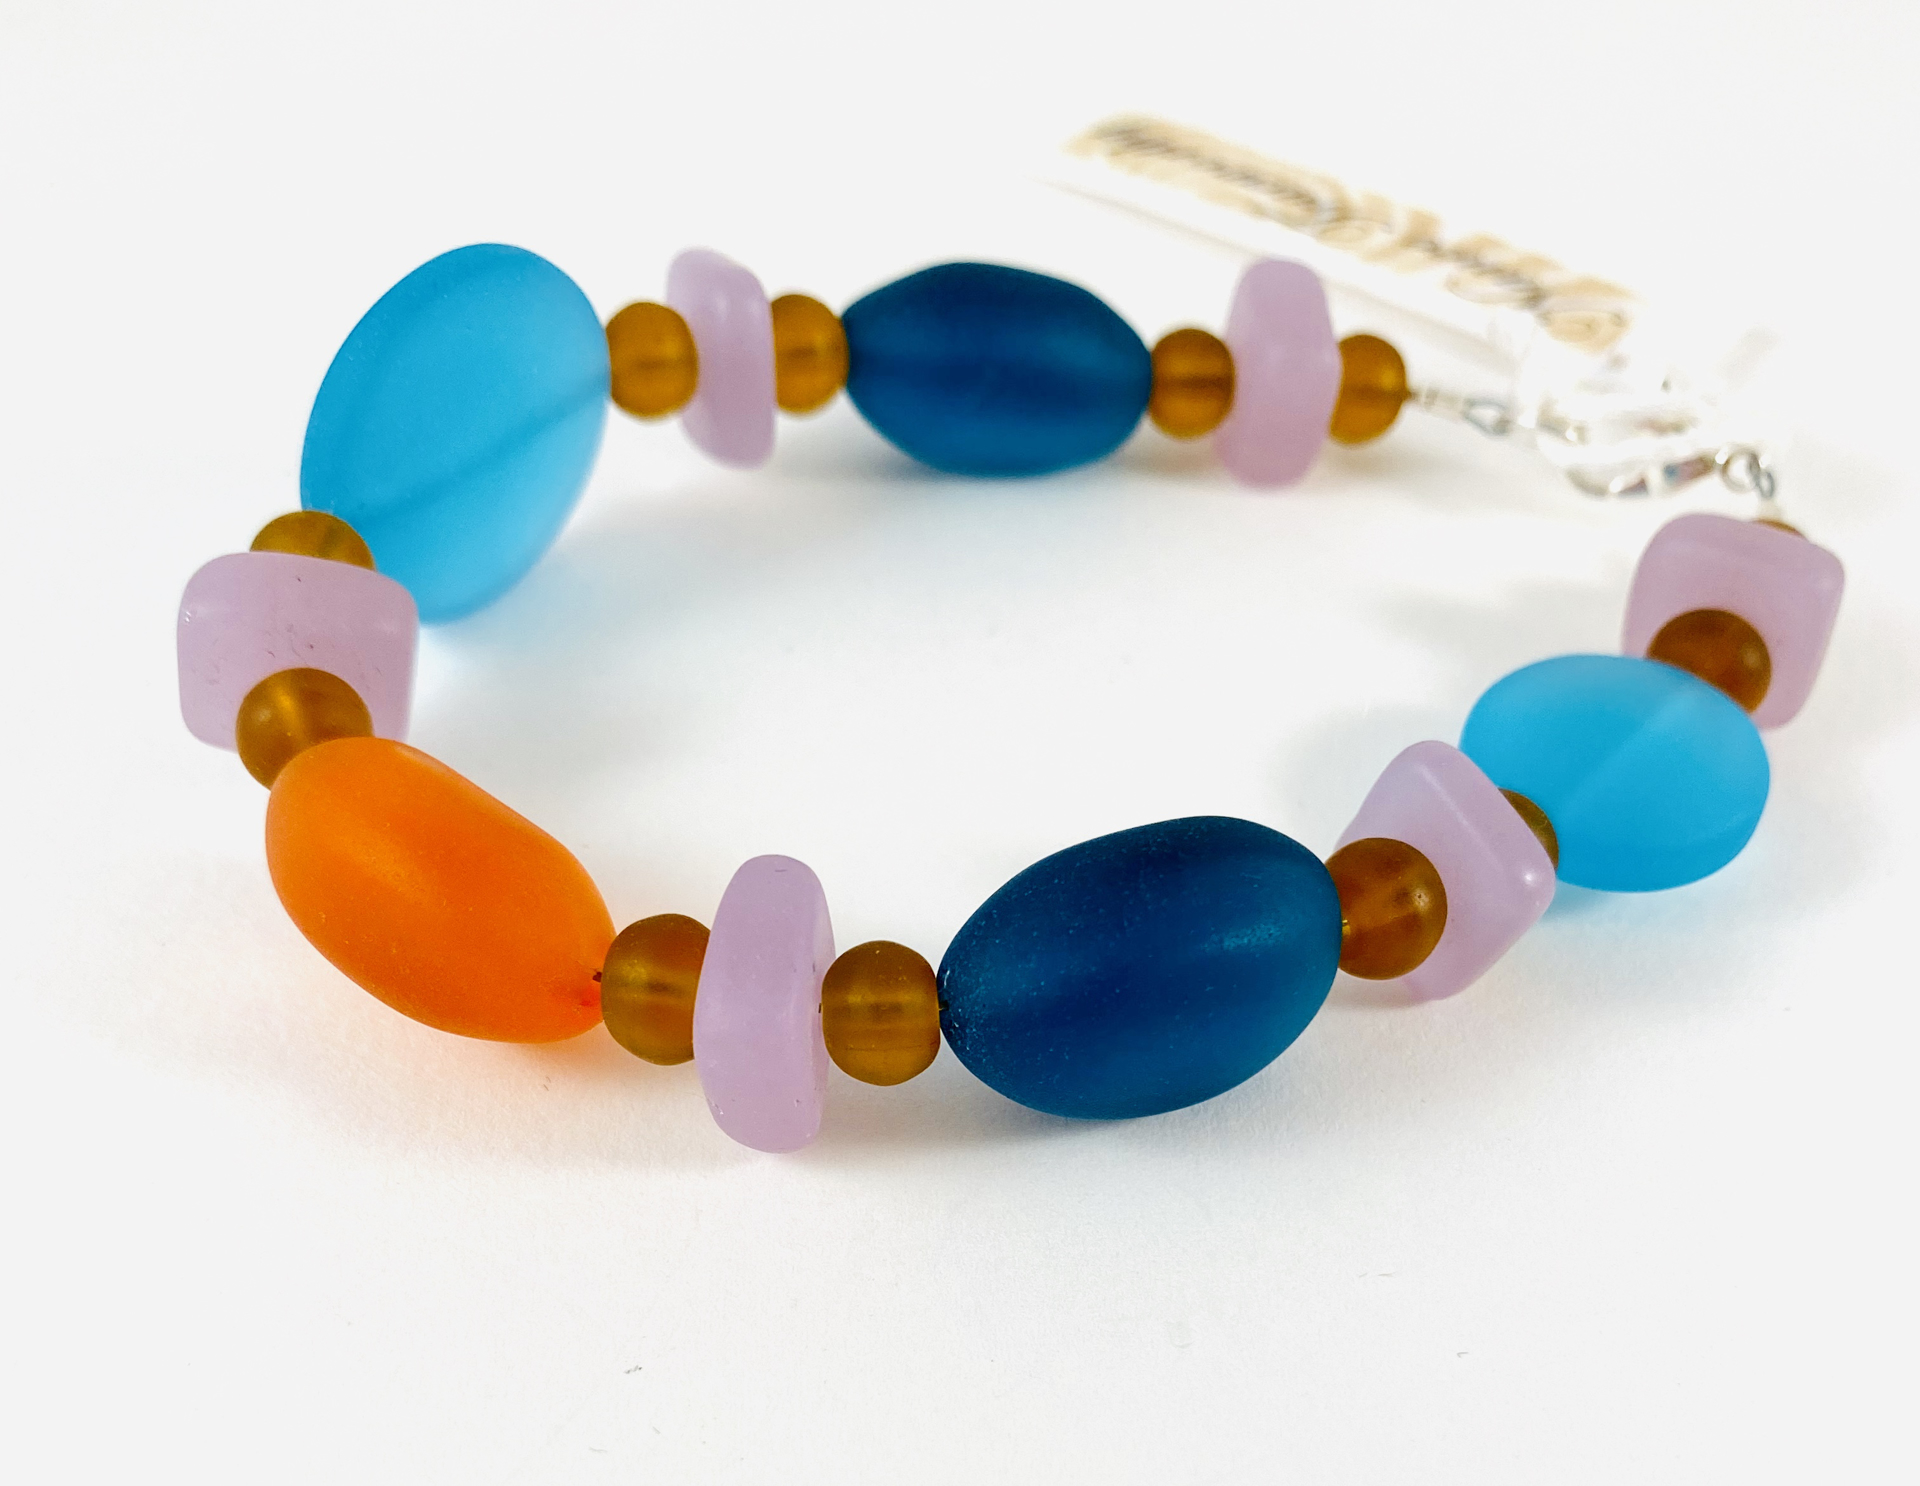 Cultured Seaglass Bracelet #3 by Nance Trueworthy